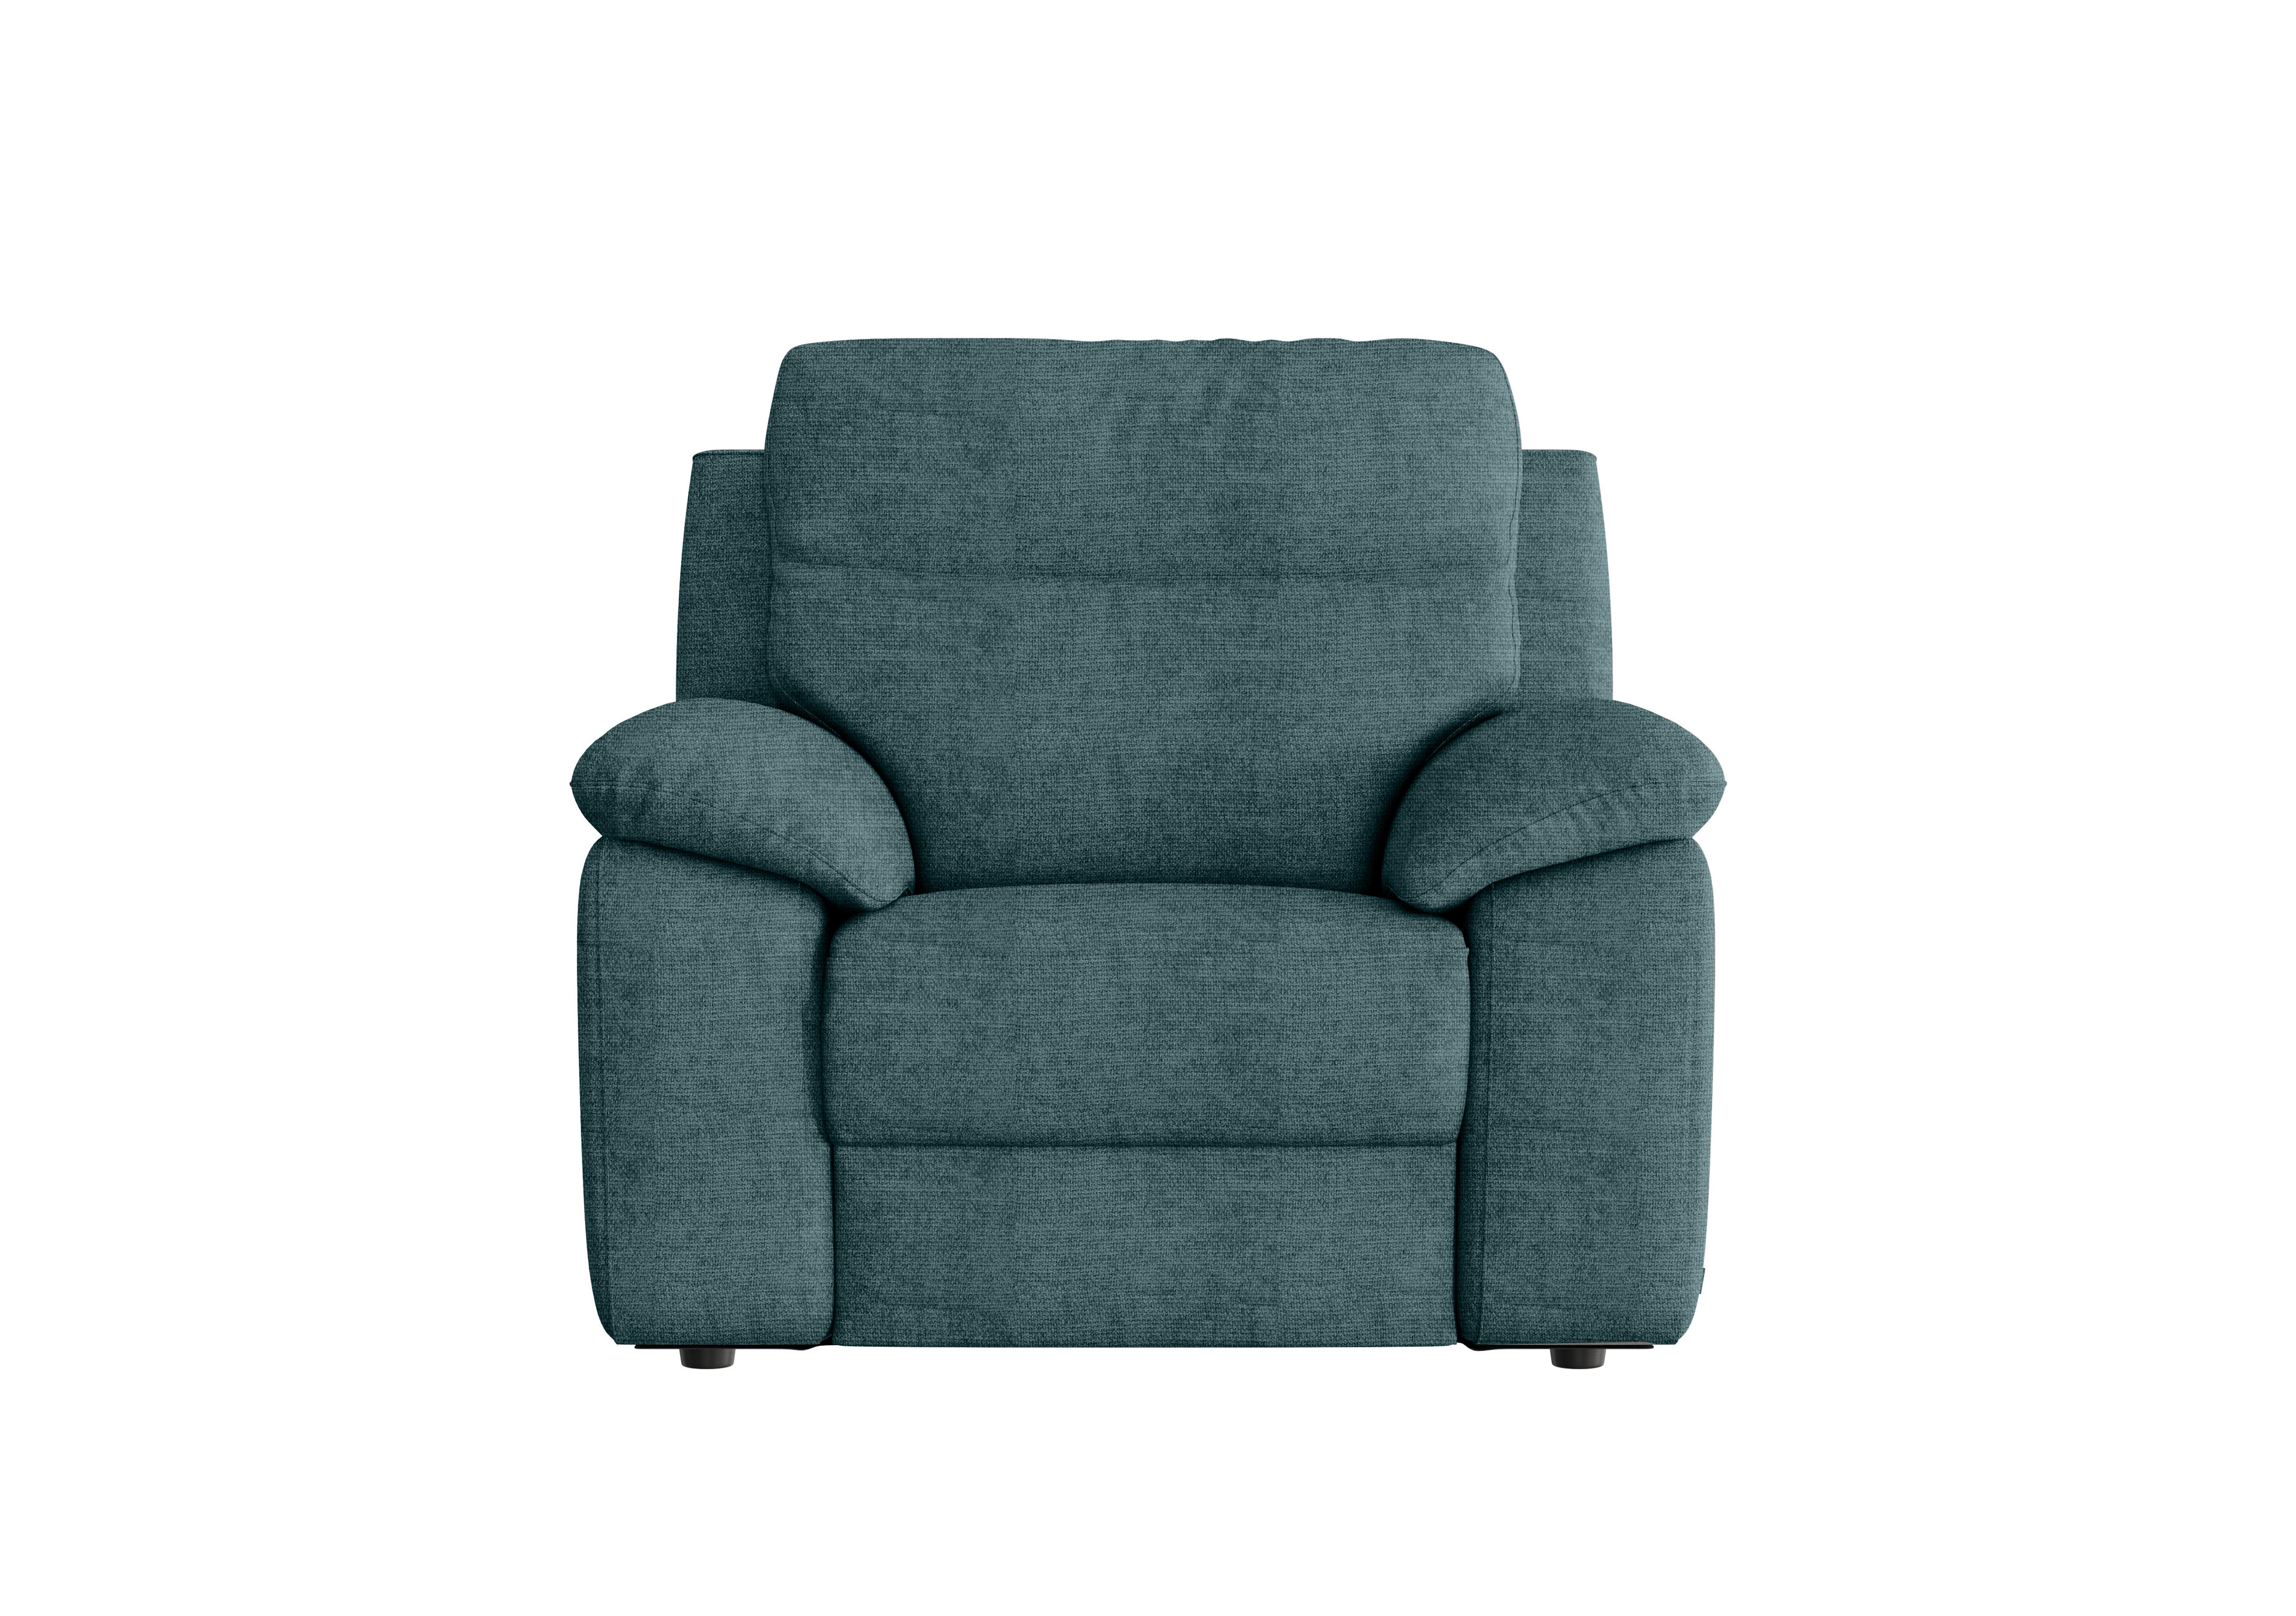 Pepino Fabric Chair in Baobab Blue 557 on Furniture Village